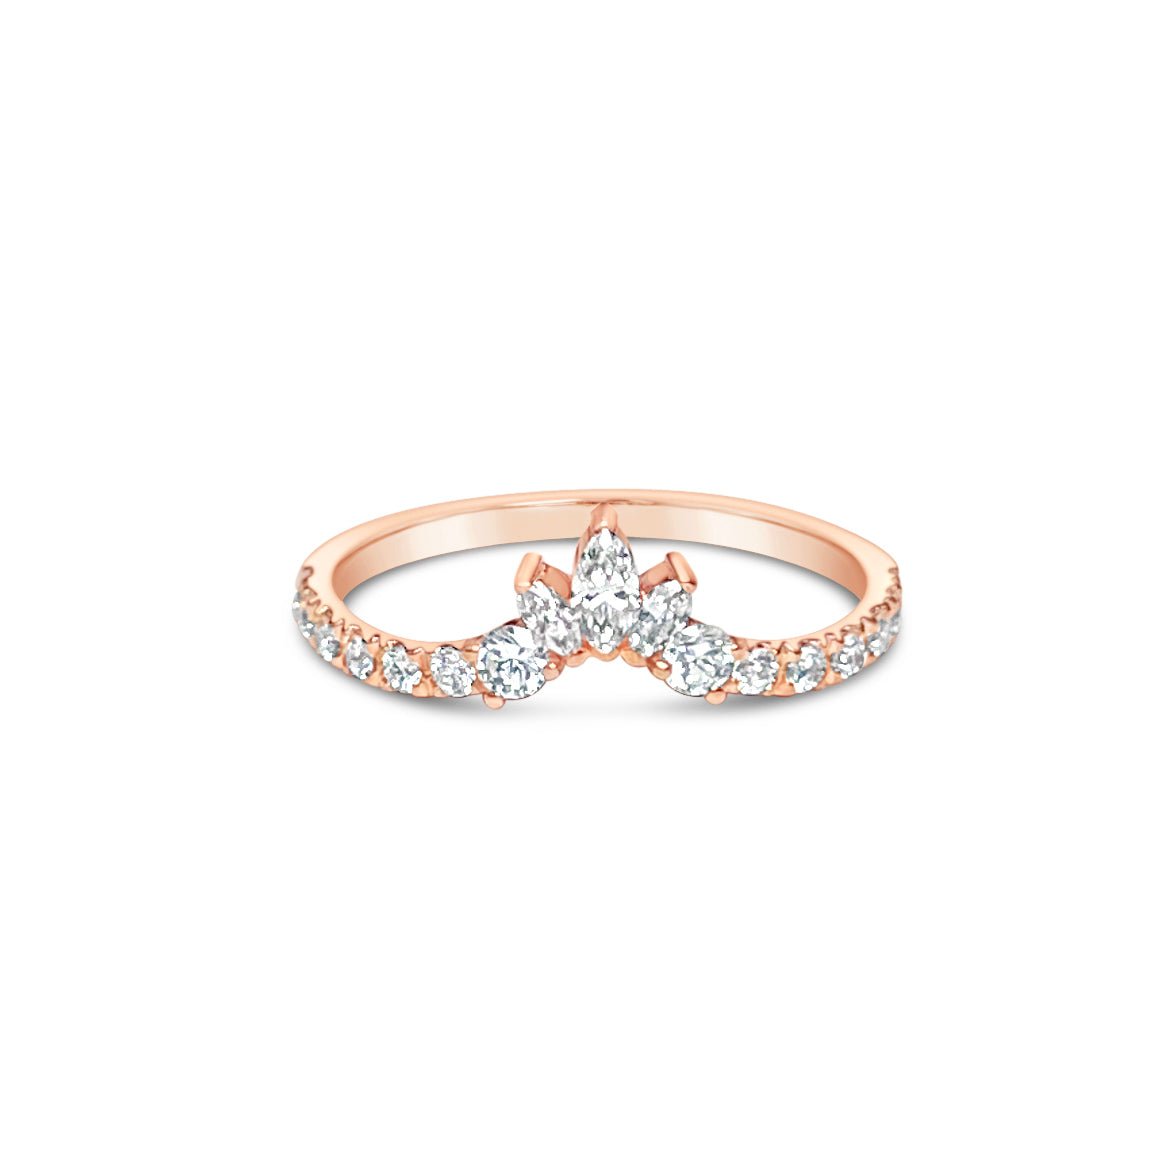 BRAU || marquise diamond wedding band - LOFT.bijoux || Custom jewelry & wedding rings / Bijoux sur mesure & bagues de mariage || Montreal